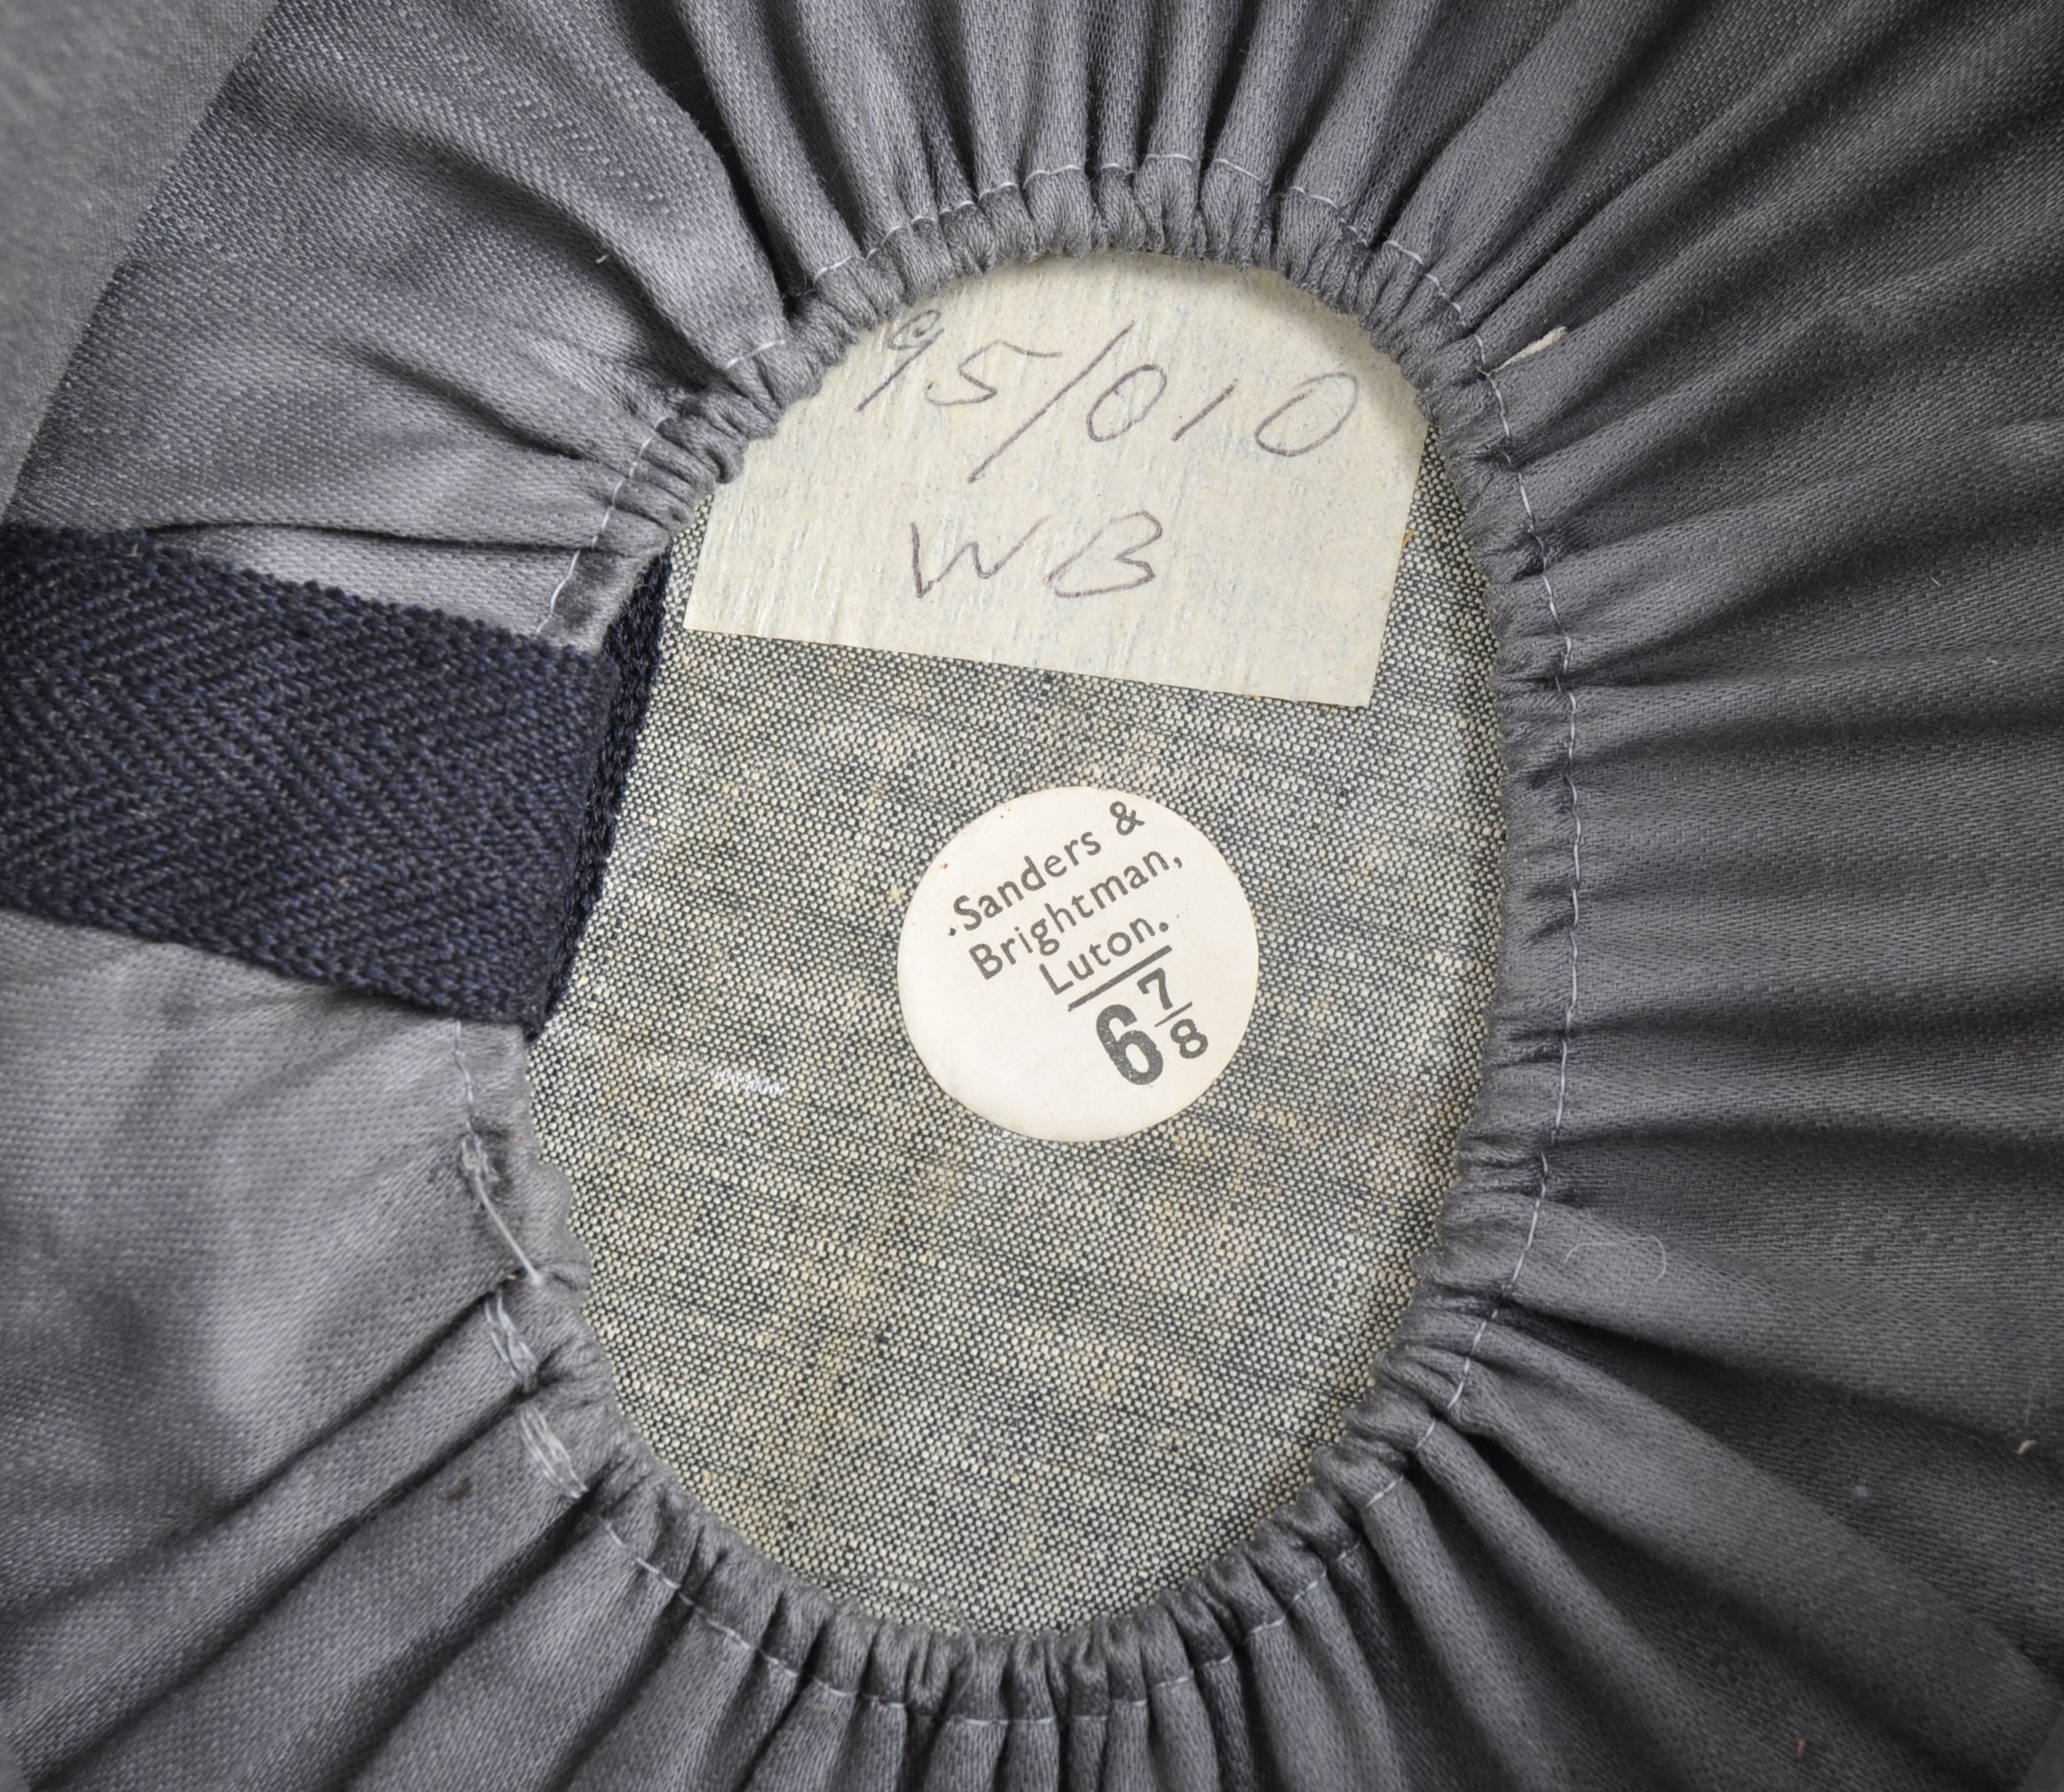 WWII SECOND WORLD WAR INTEREST - HMS GANGES UNIFORM CAP - Image 4 of 4